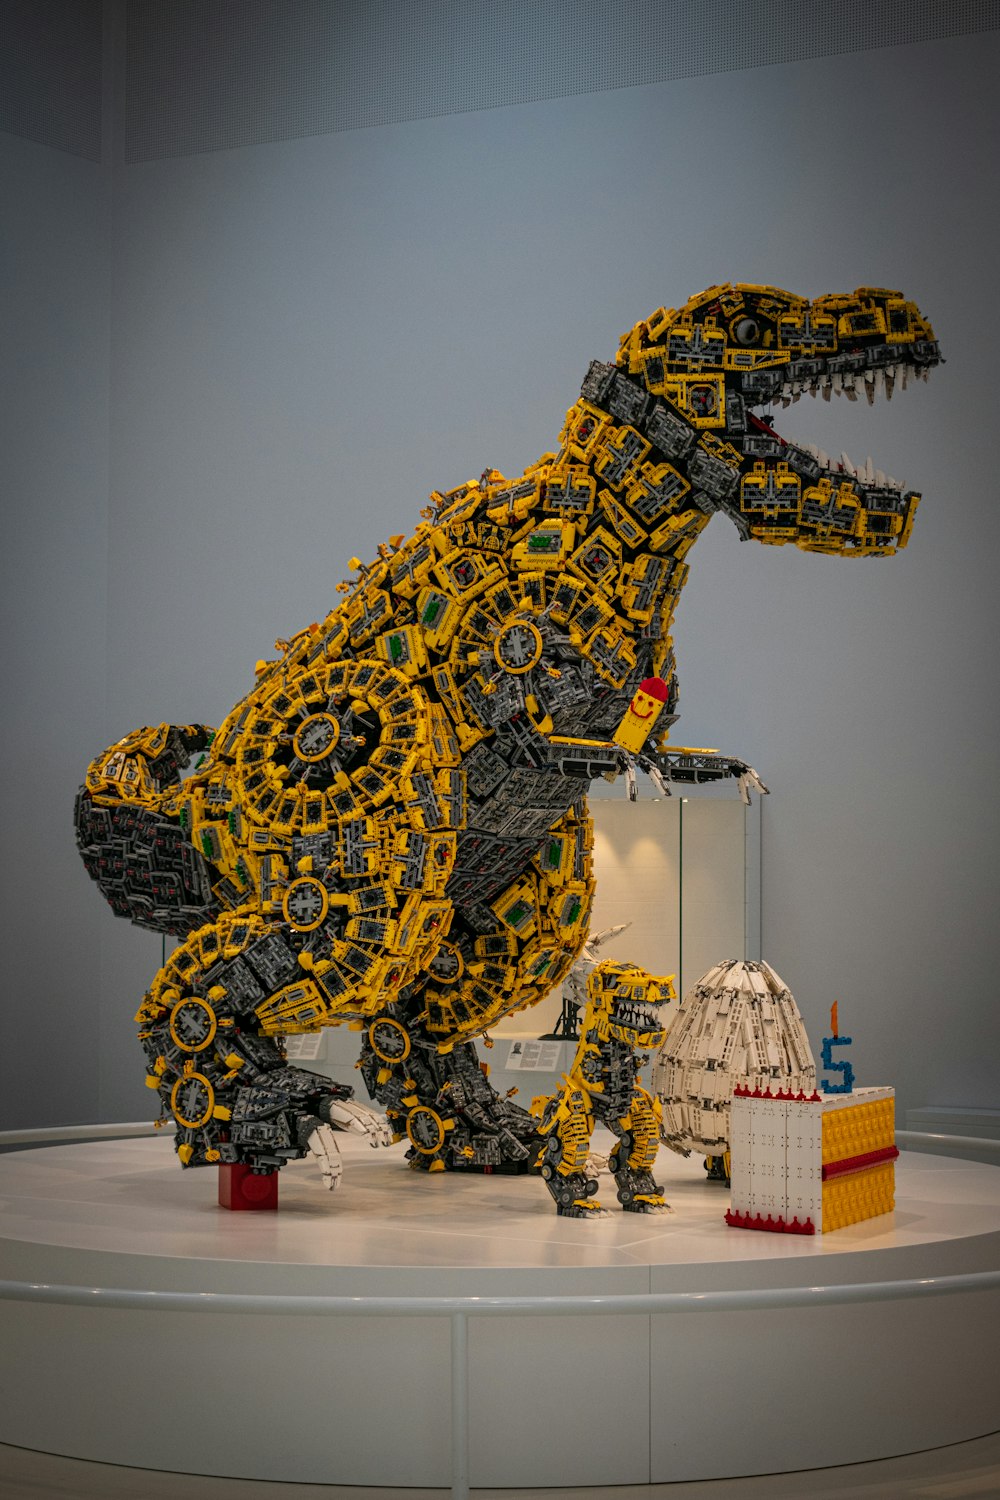 a lego model of a dinosaur on display